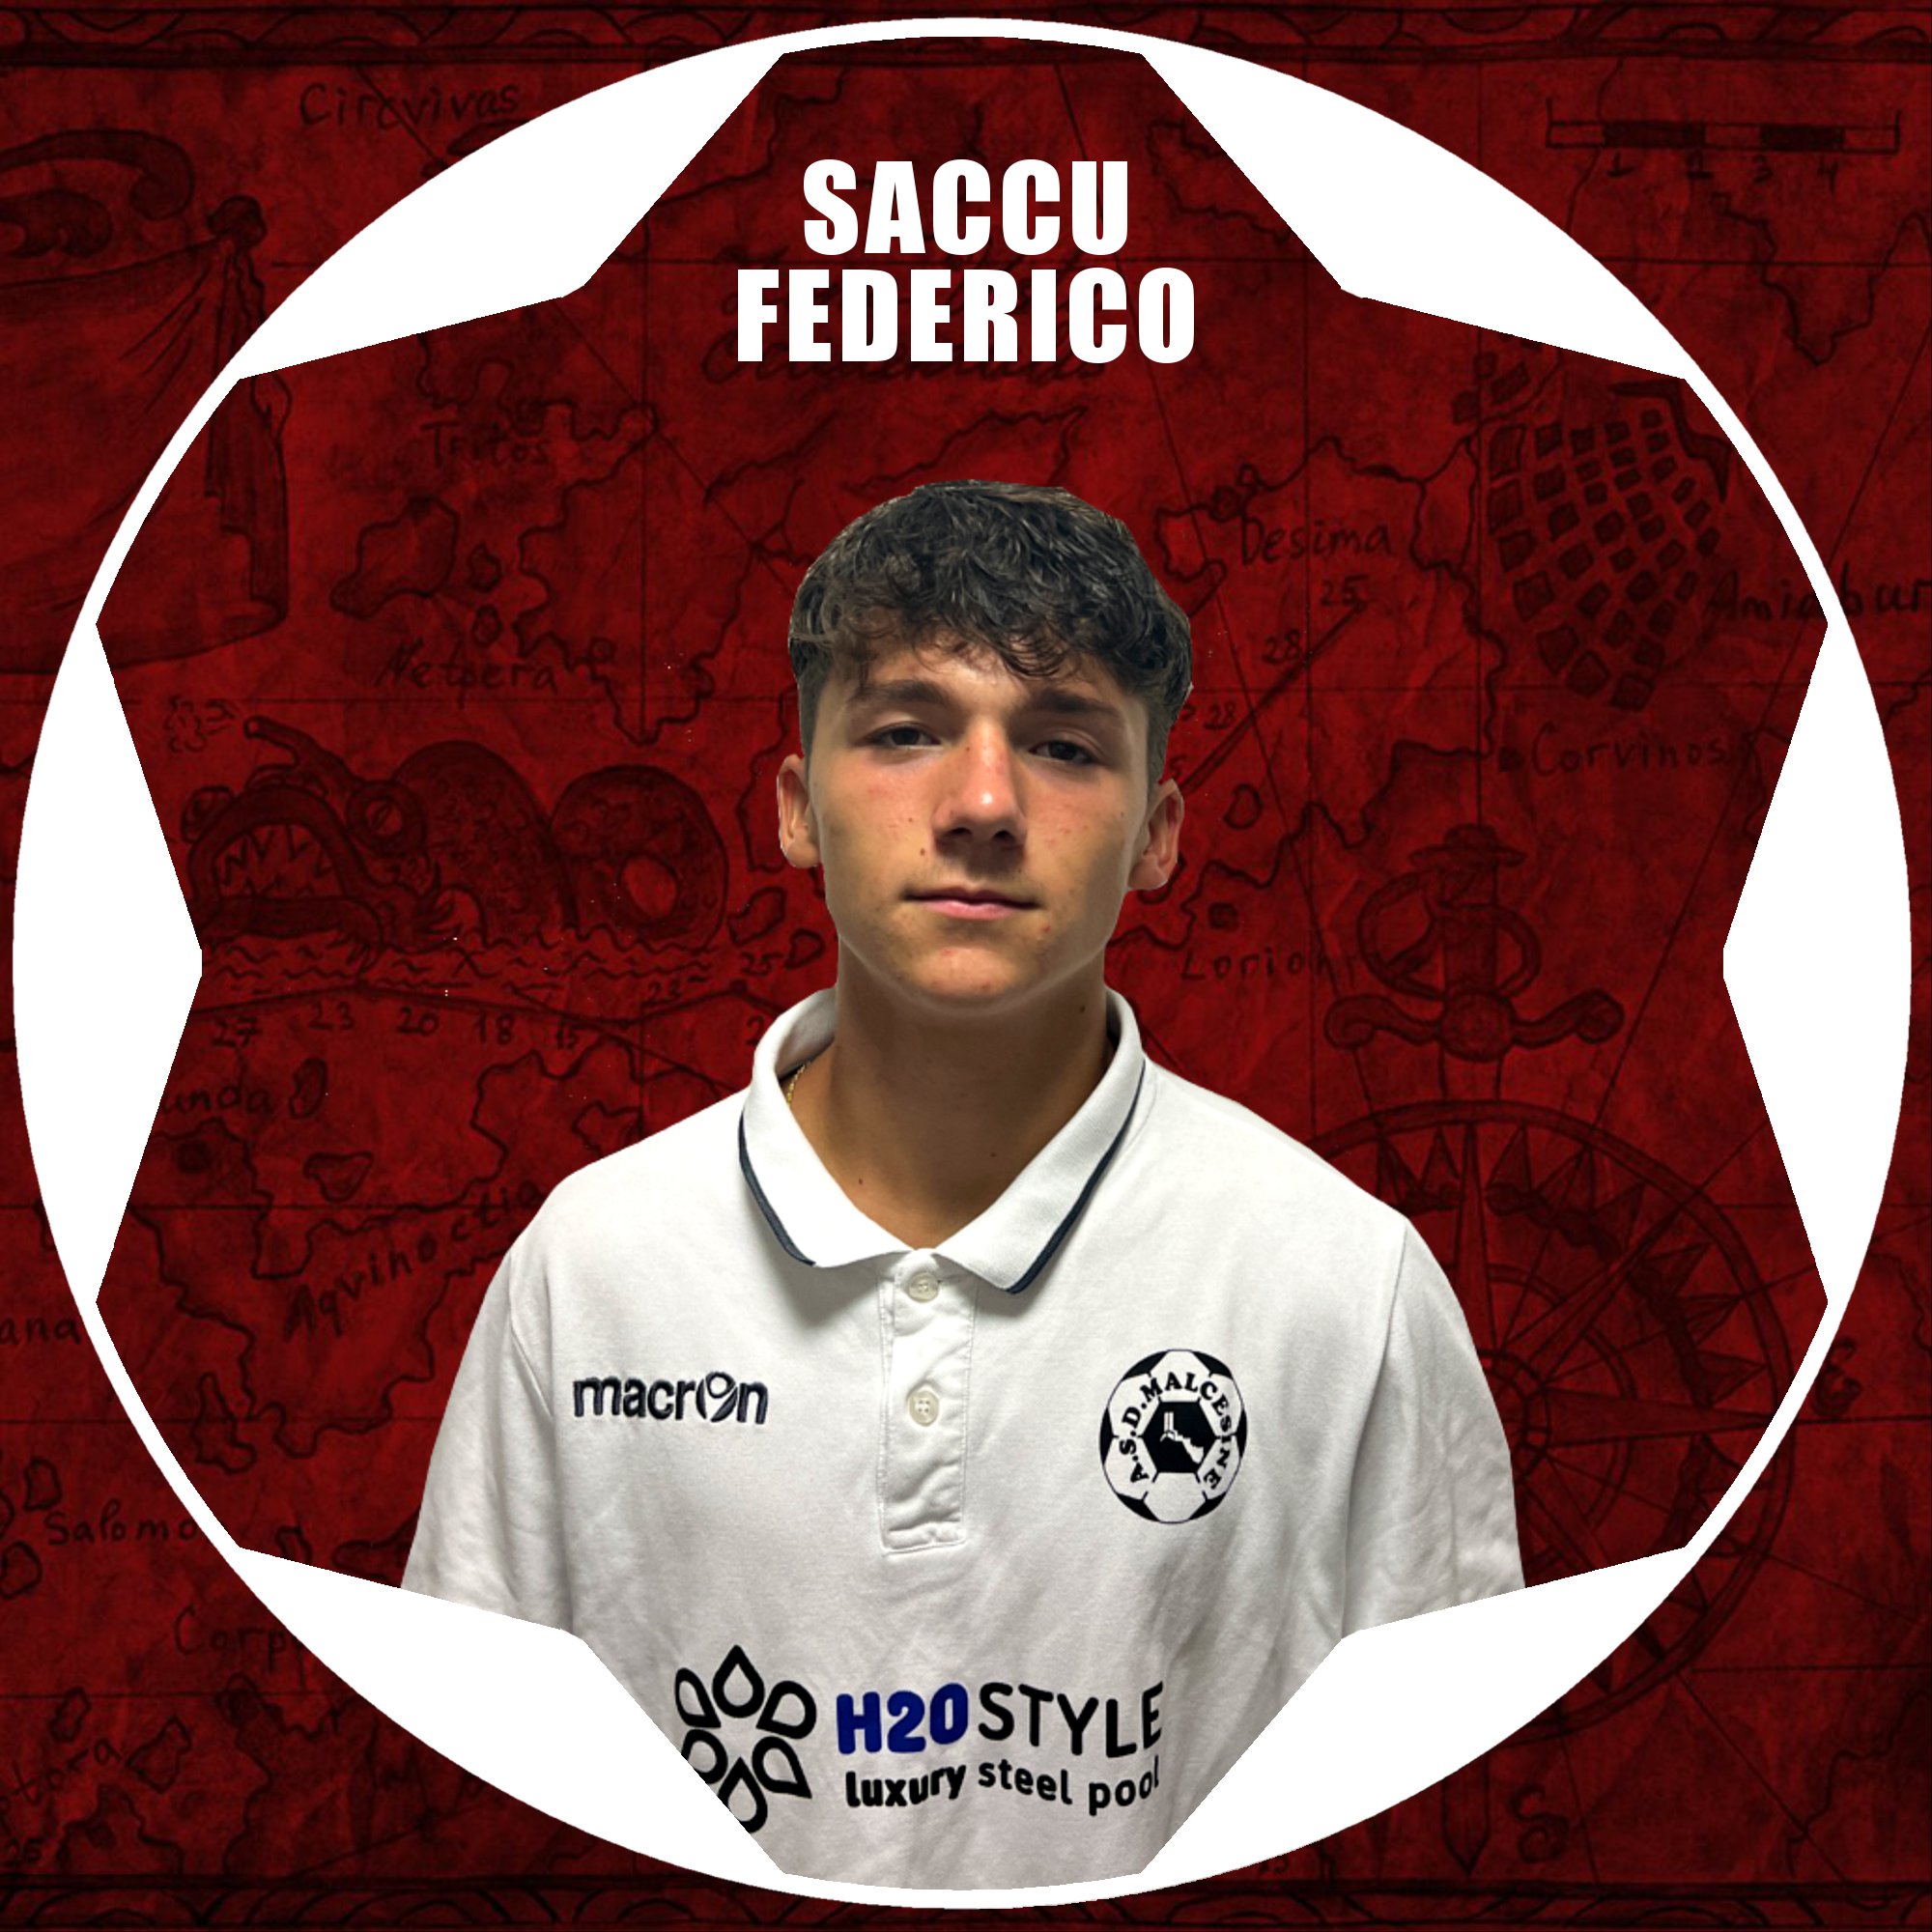 Saccu Federico